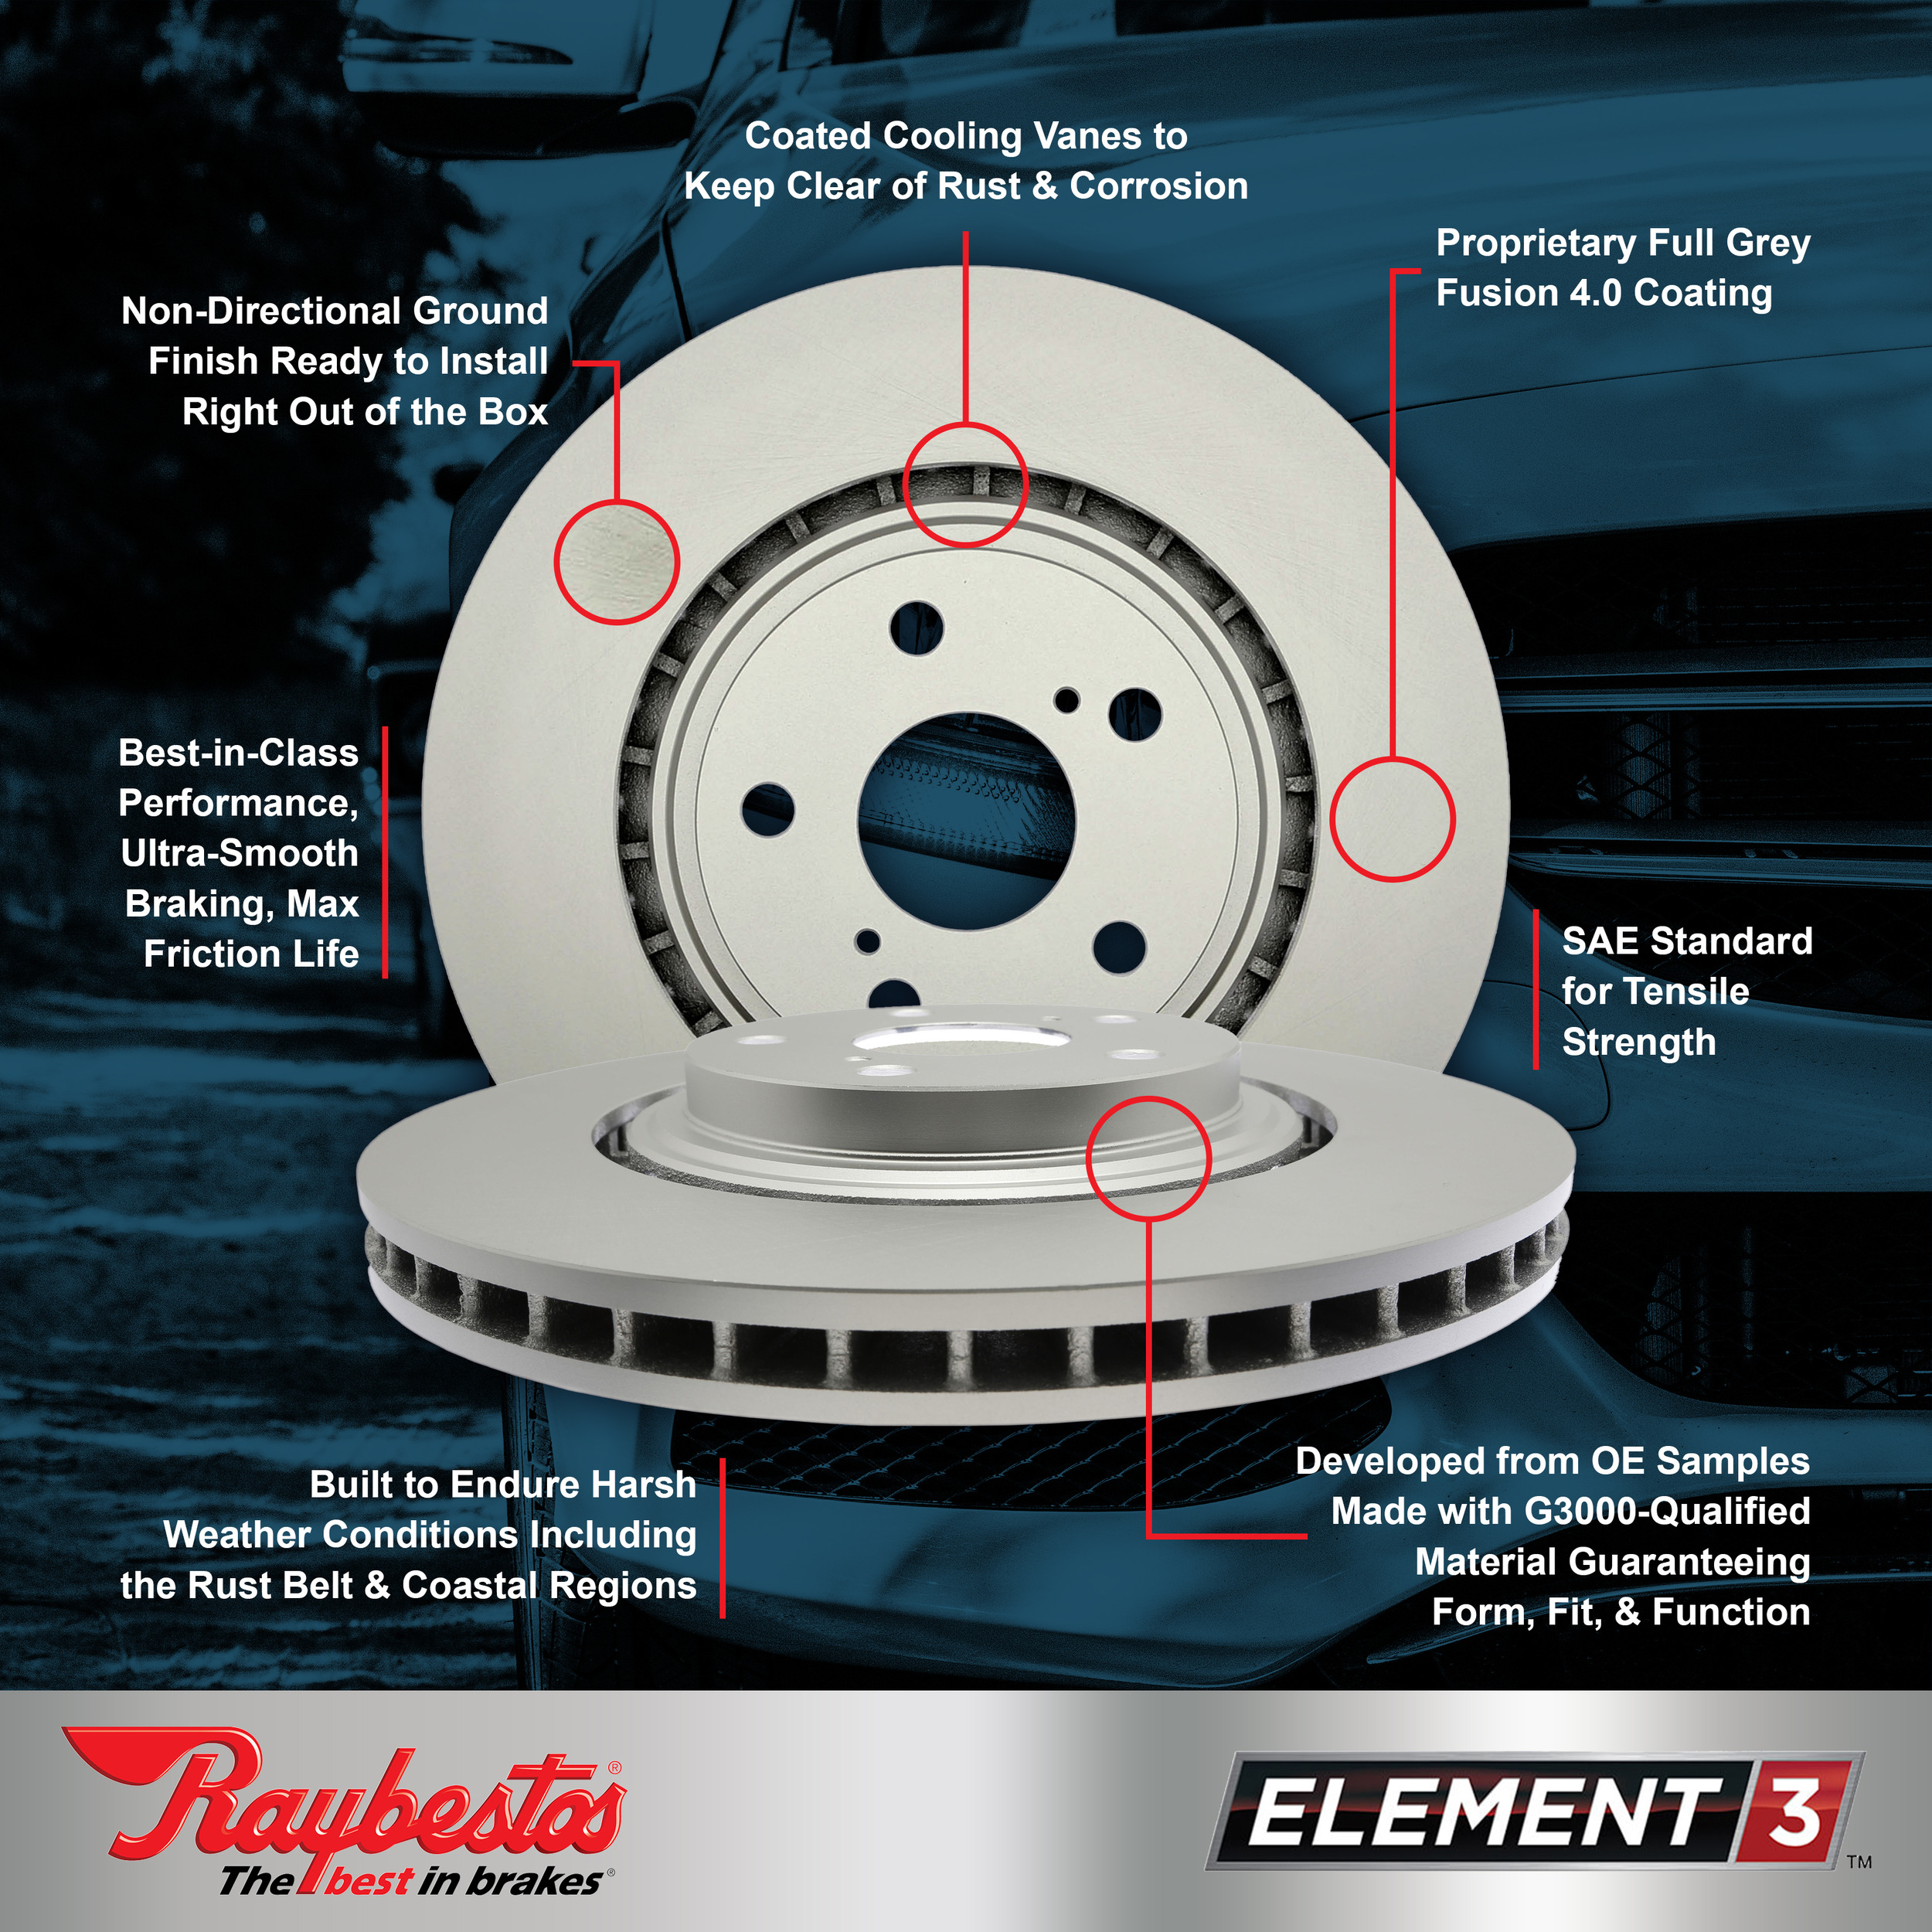 Raybestos Specialty Performance Rotors, 581045 Fits select: 2013-2017 CADILLAC ATS, 2018 CADILLAC ATS-V - image 4 of 6